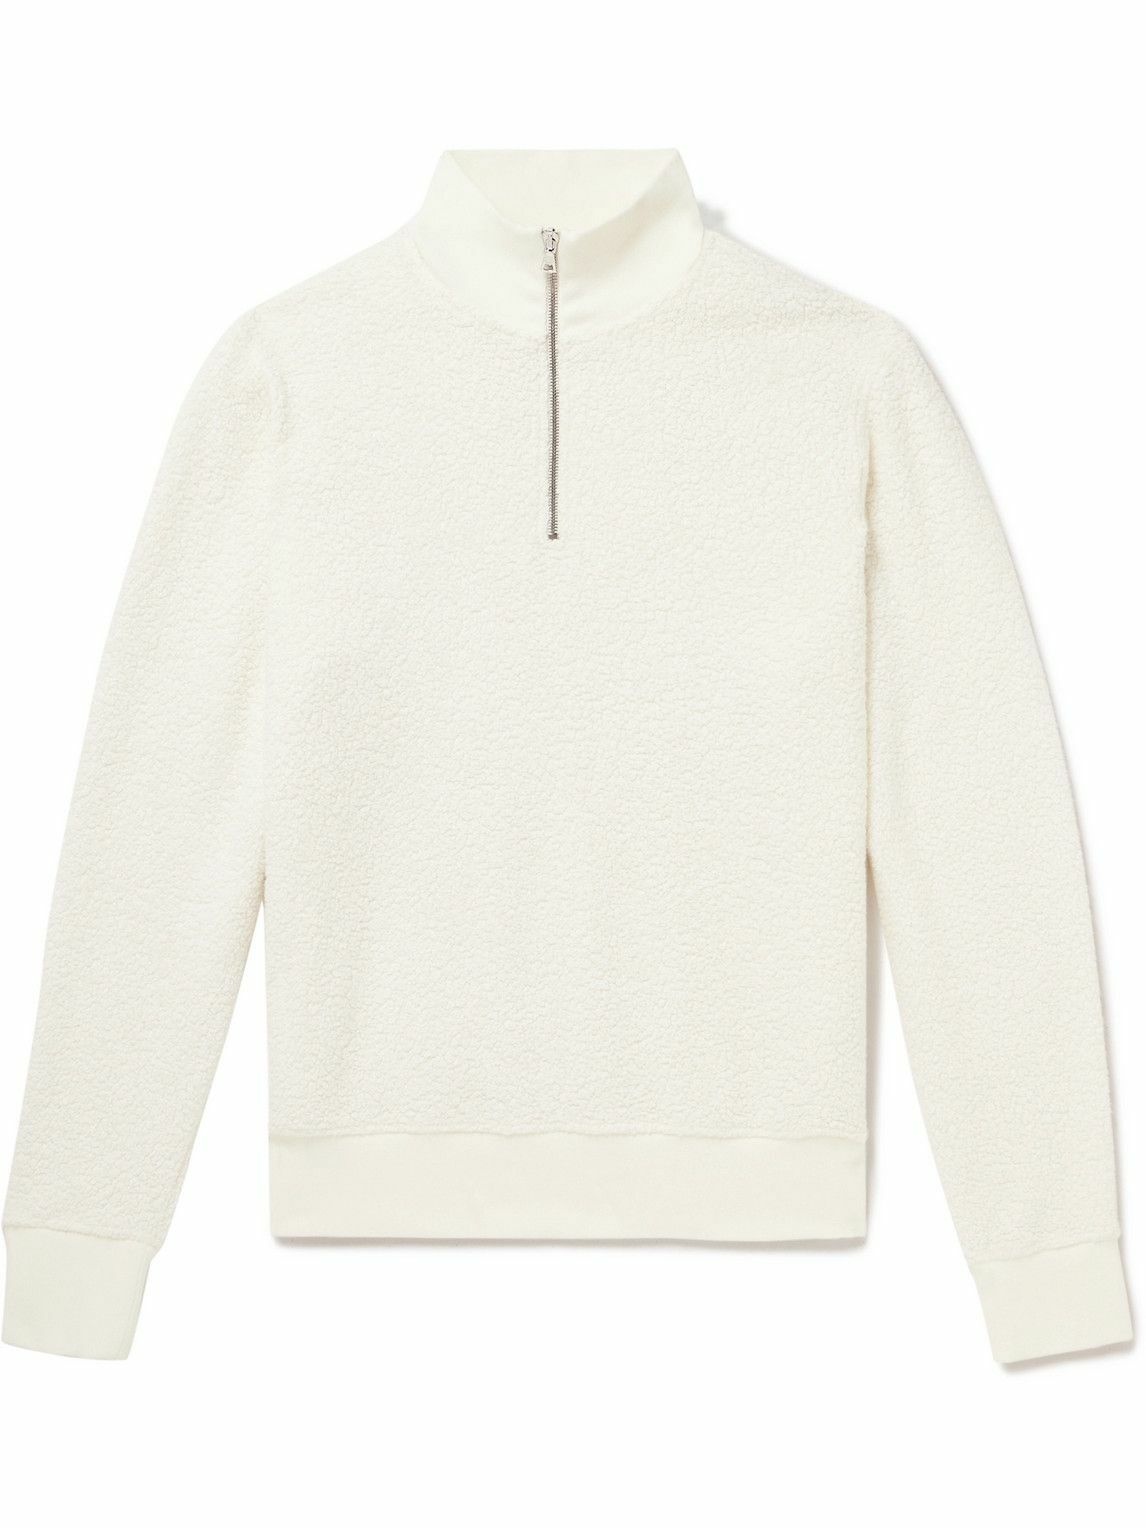 Orlebar Brown - Isar Half-Zip Fleece Sweatshirt - White Orlebar Brown